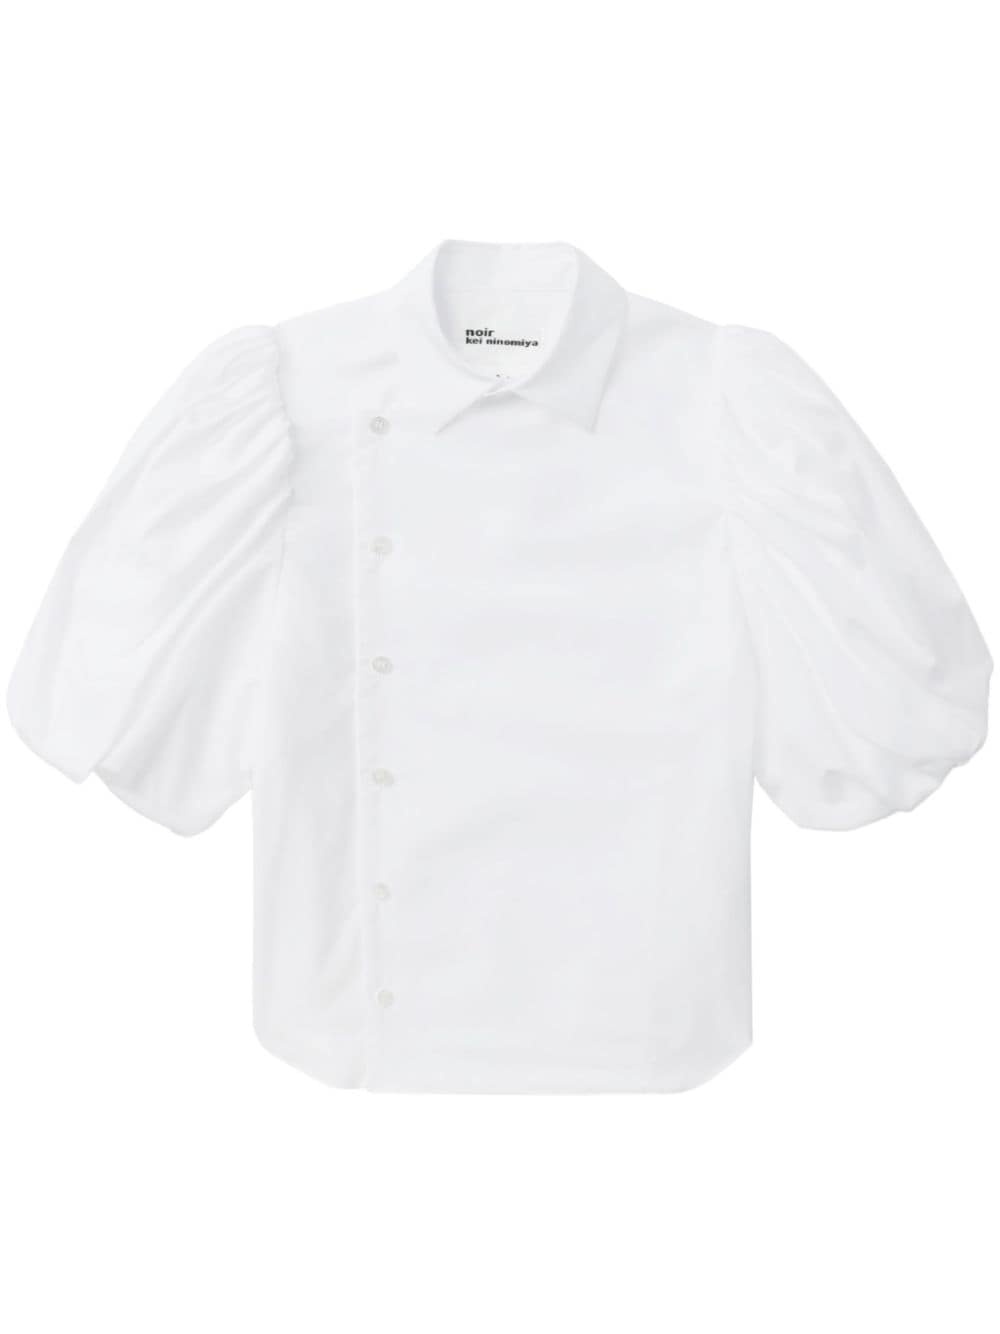 off-centre-fastening cotton shirt - 1